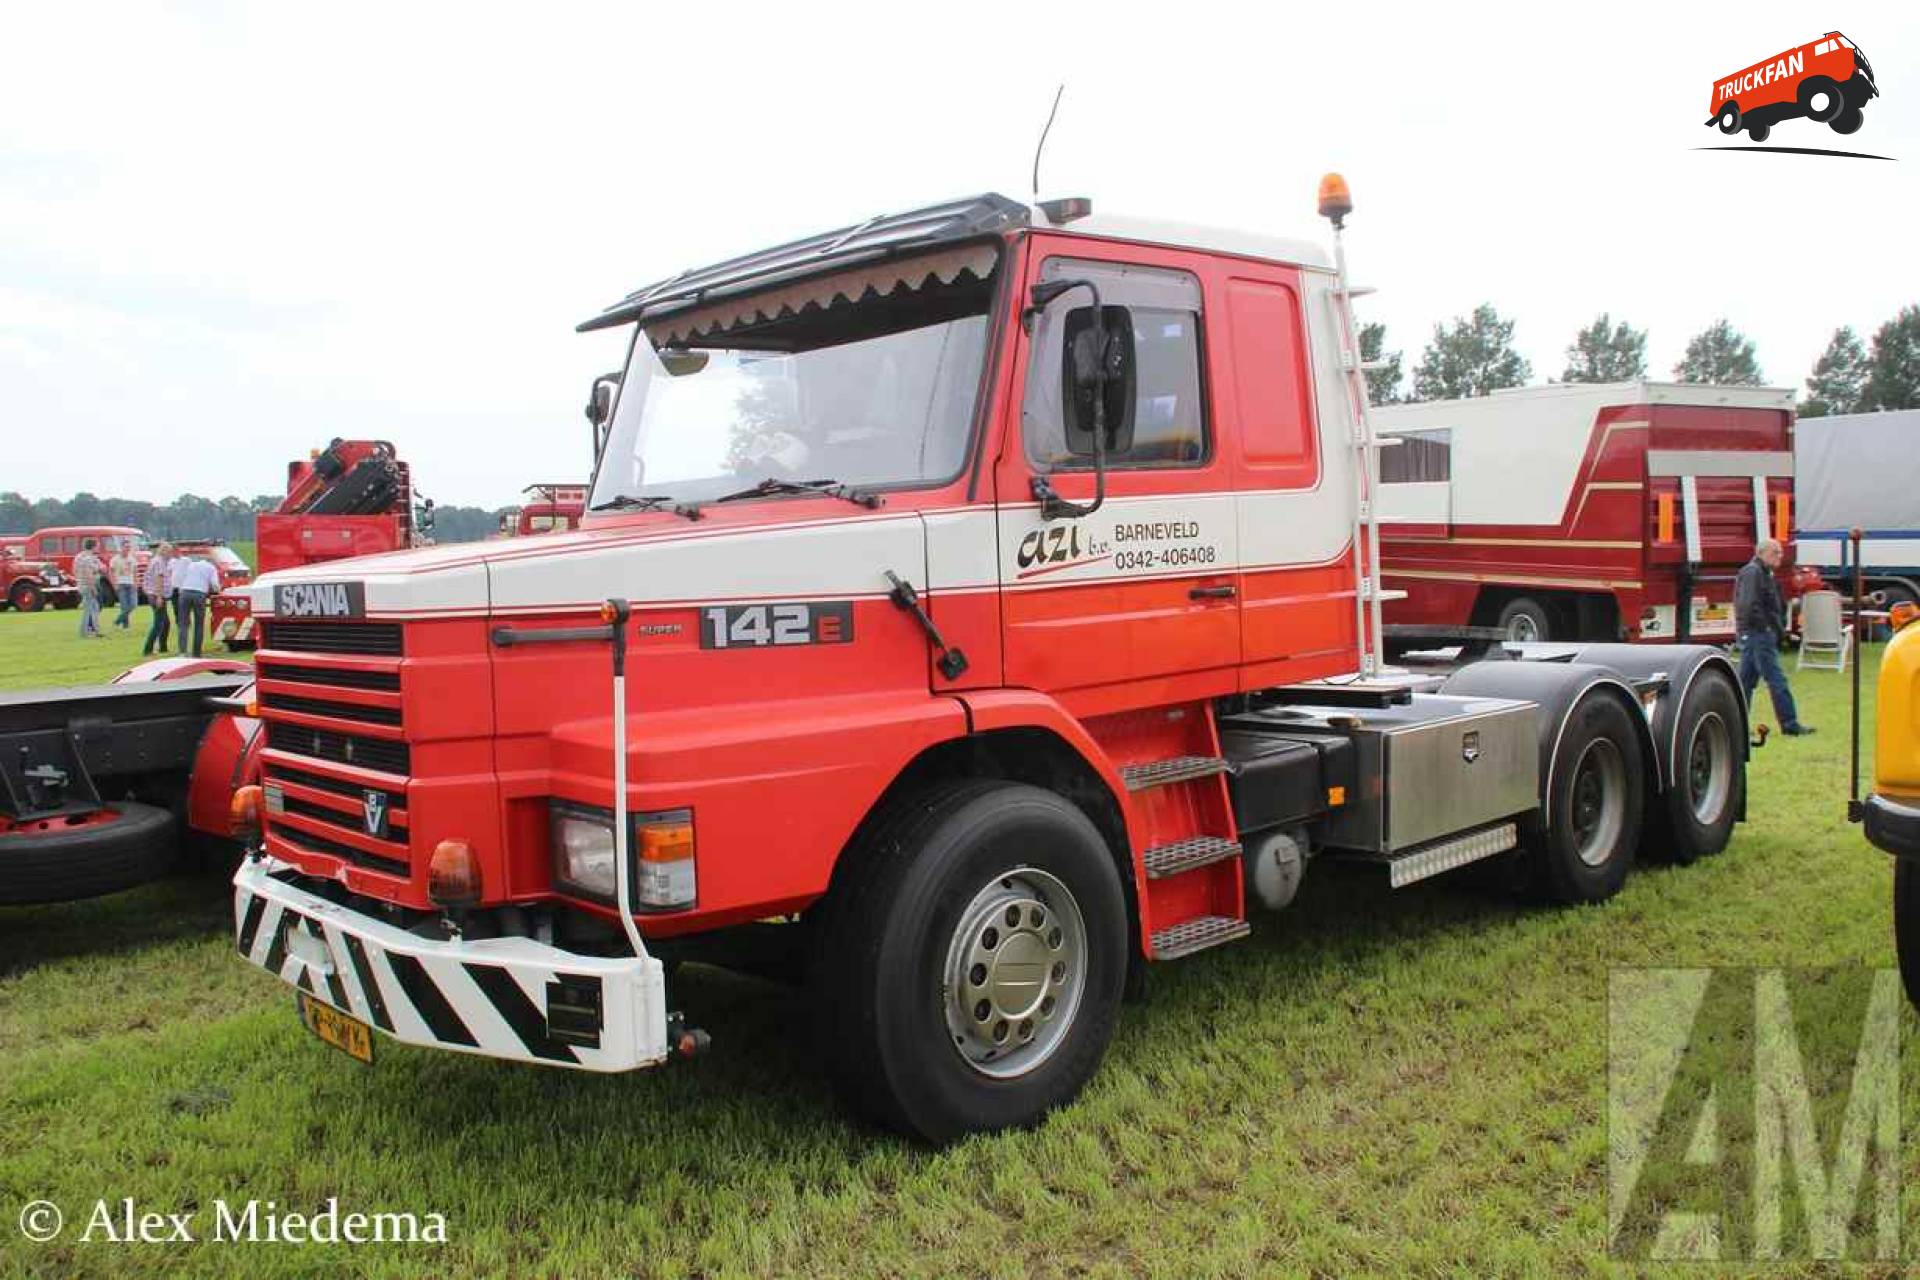 Scania T142